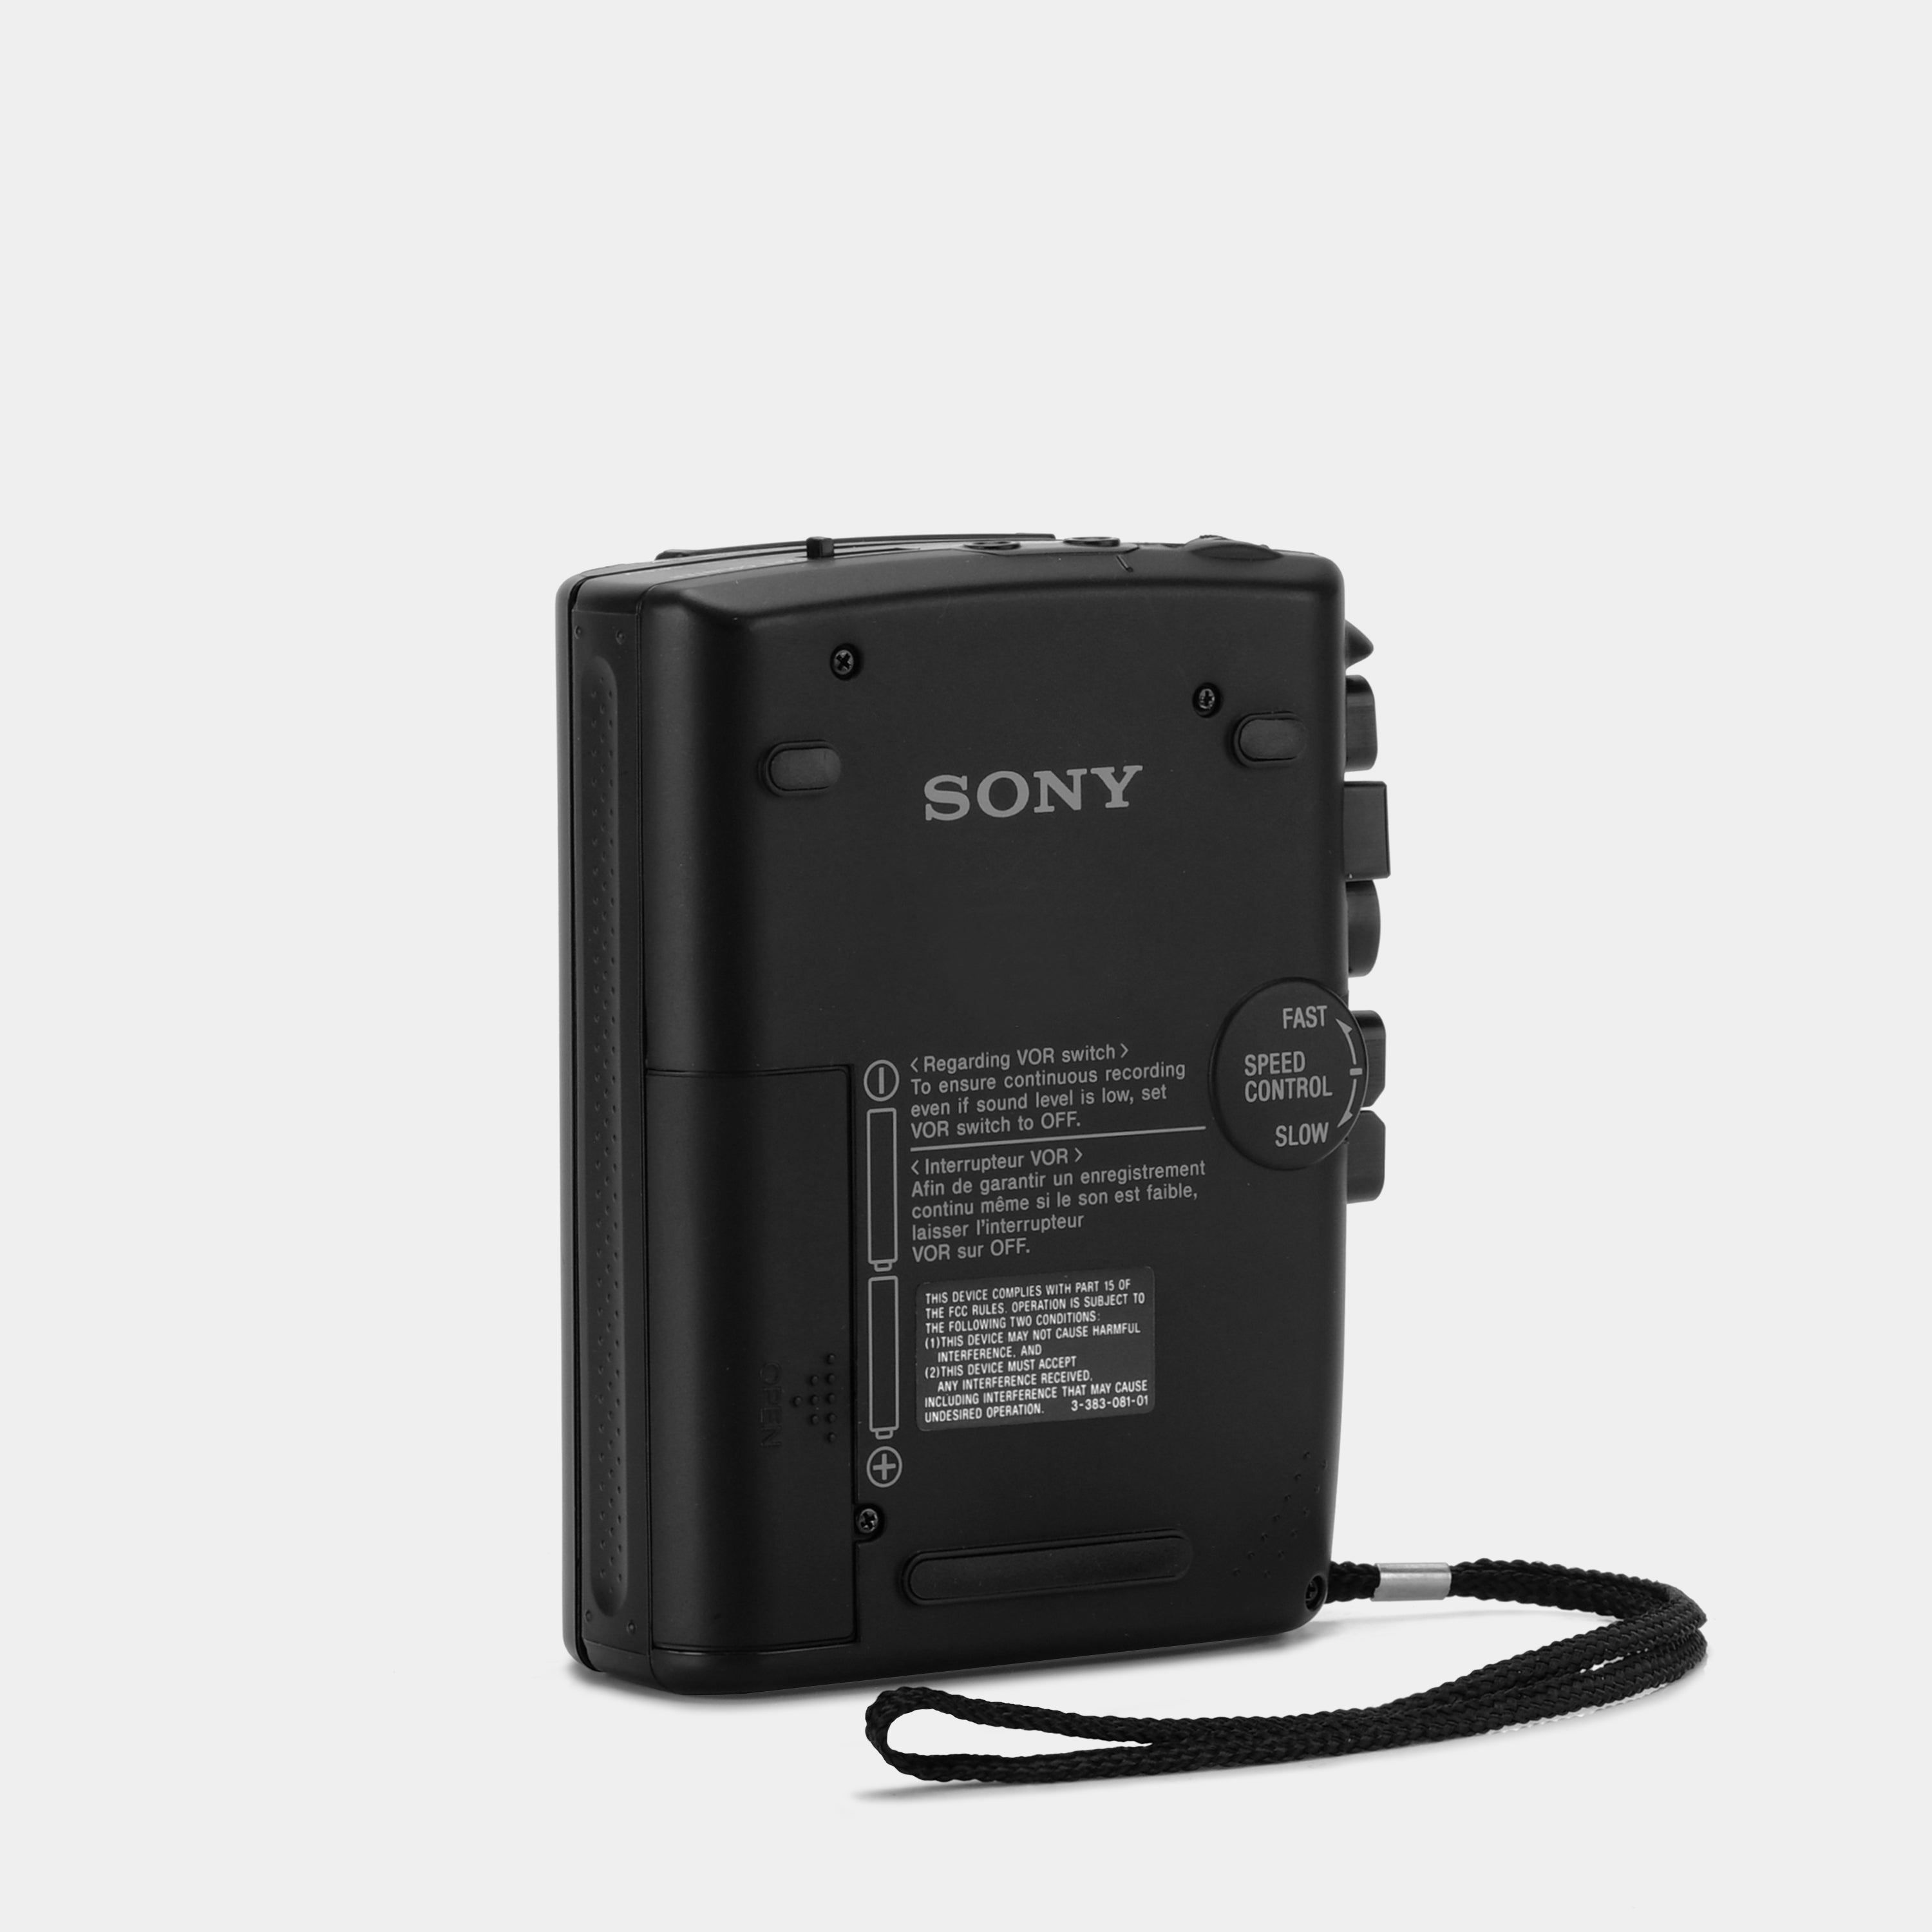 Sony Clear Voice TCM-465V Portable Cassette-Corder